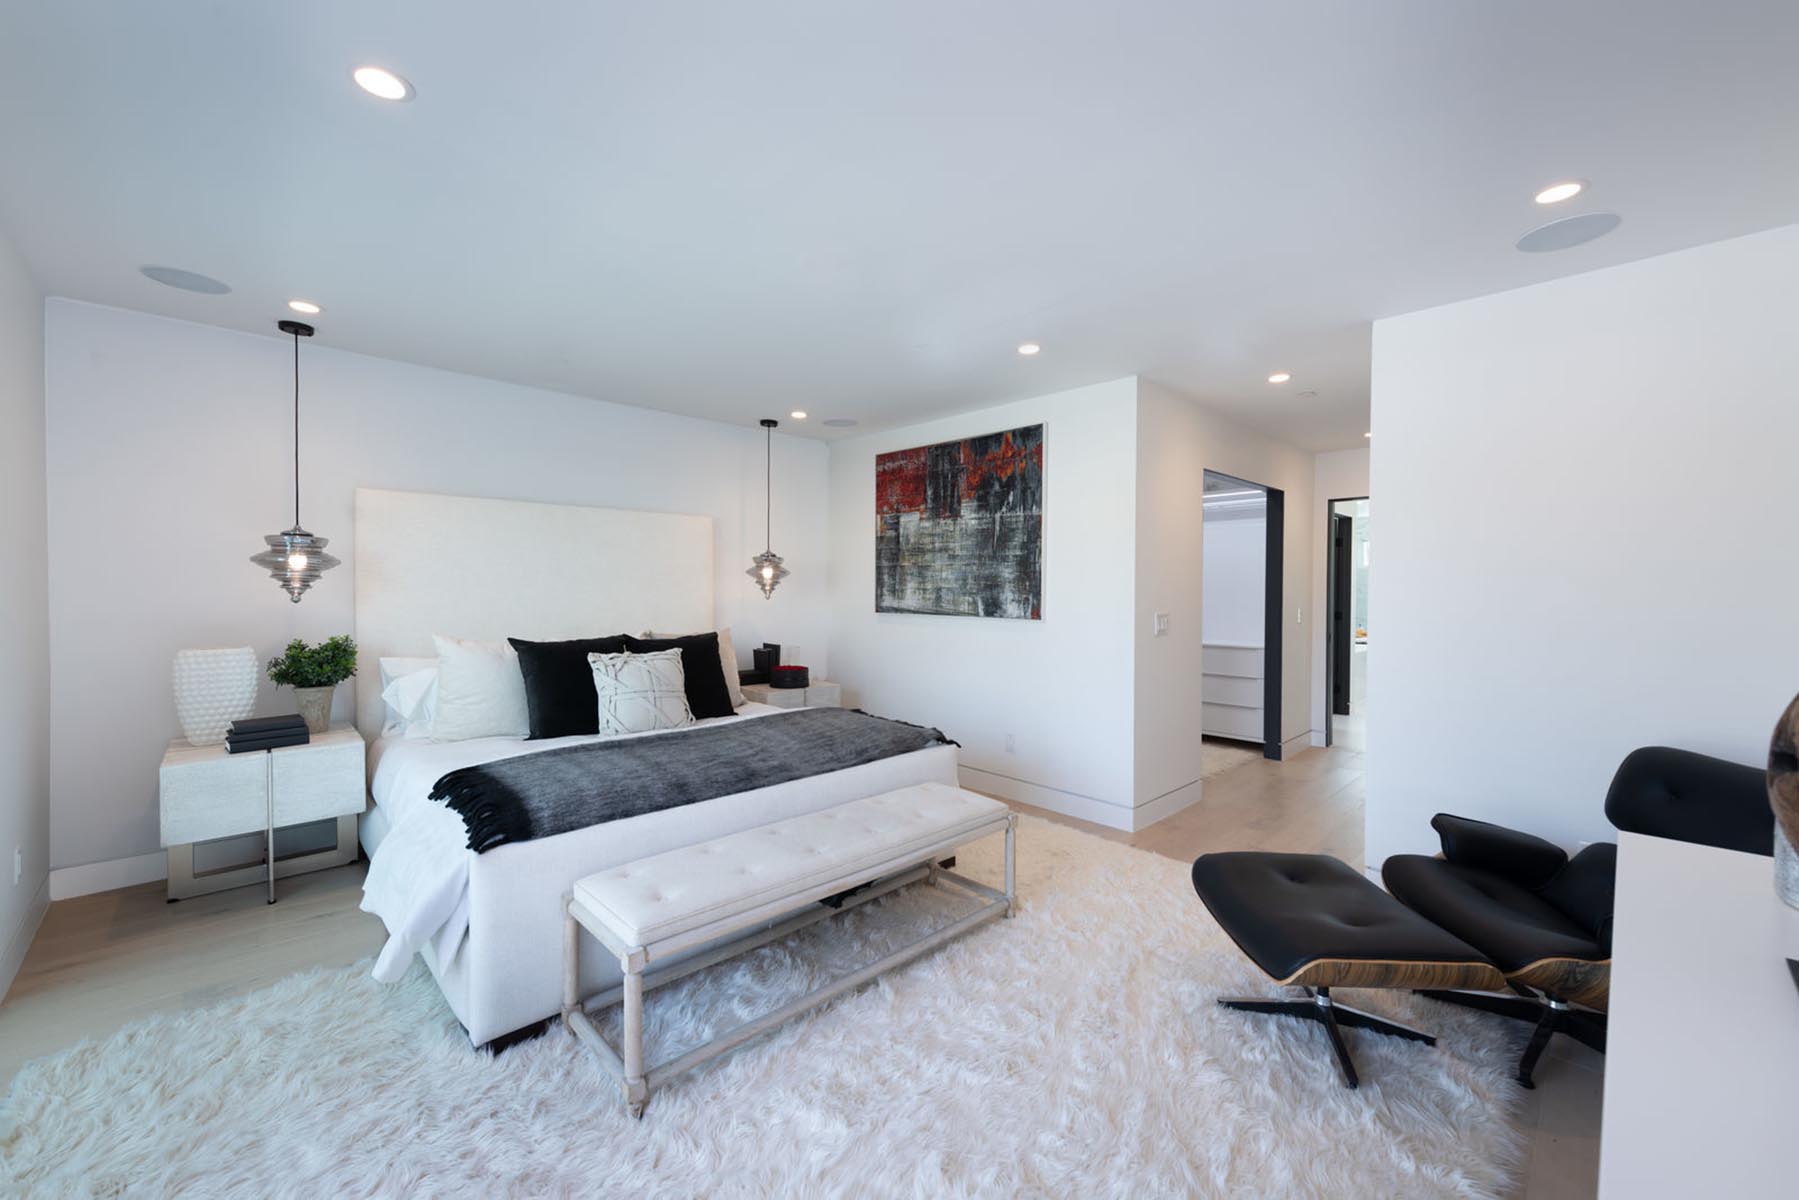 Home design Los Angeles modern contemporary master bedroom